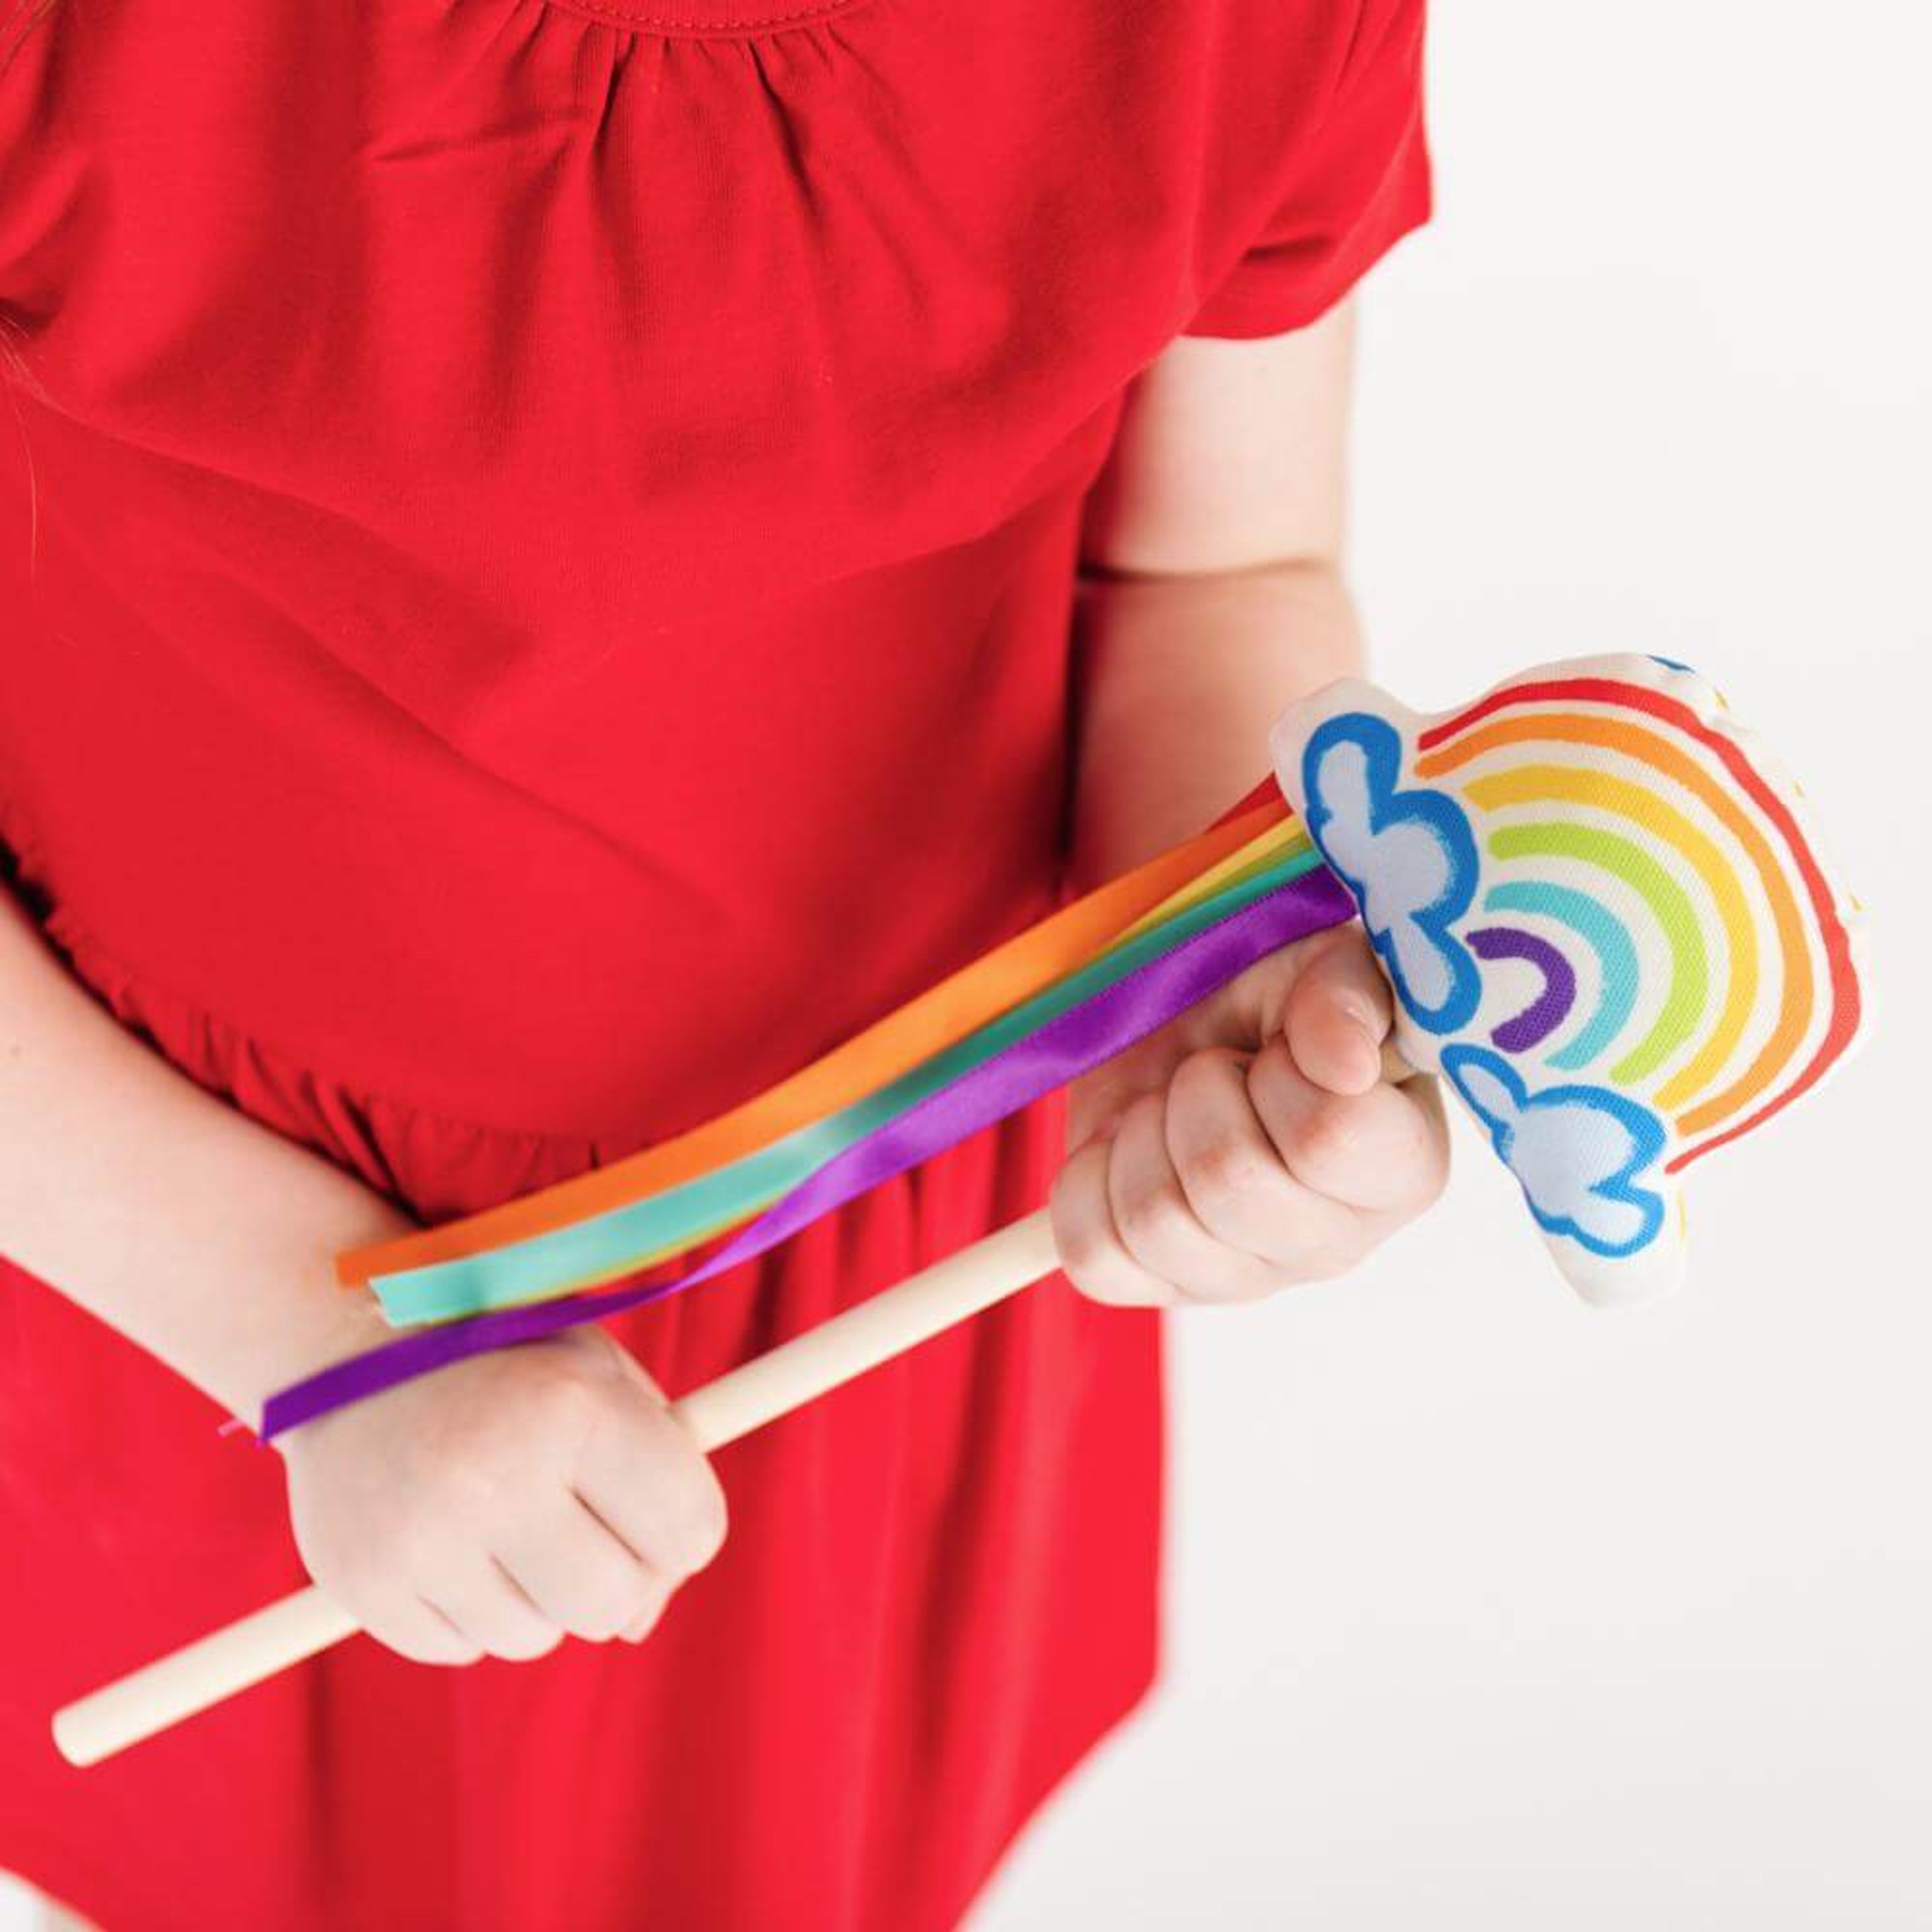 Magic Wand Toy Rainbow: "My niece loves it. Very pretty!"